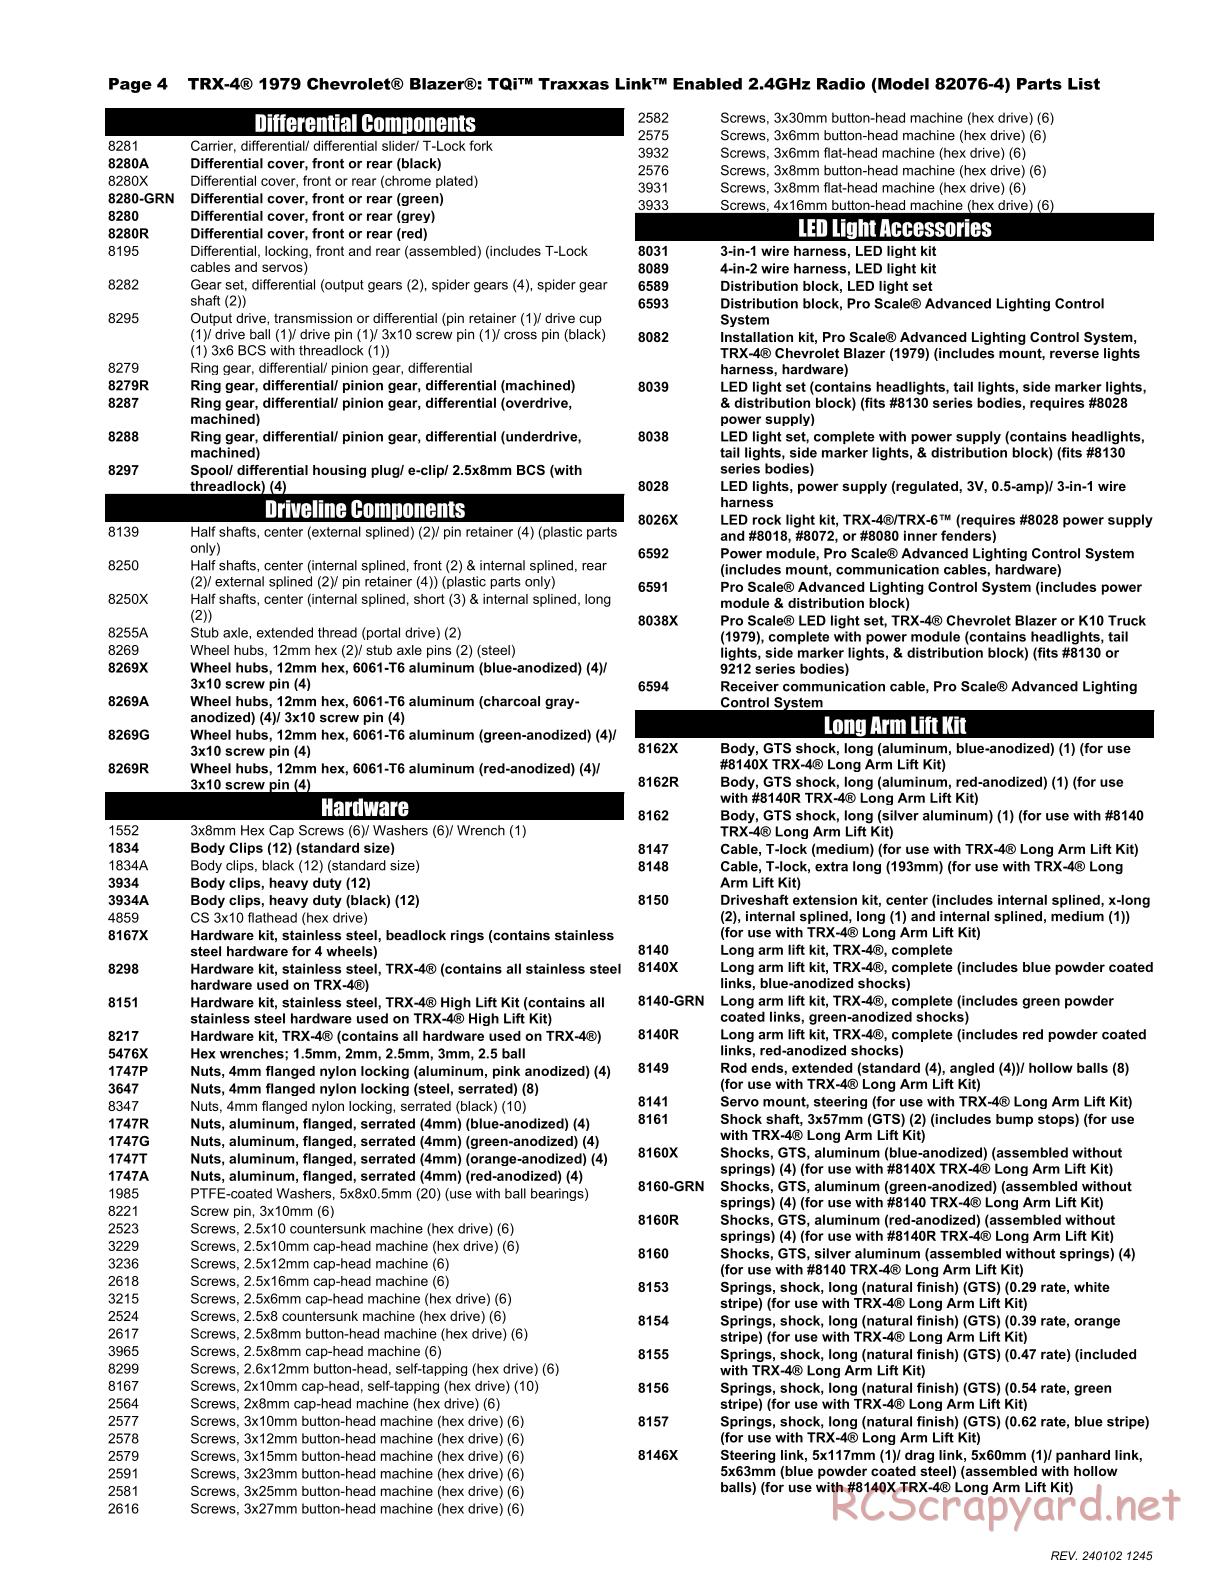 Traxxas - TRX-4 Chevrolet K5 Blazer (2019) - Parts List - Page 4